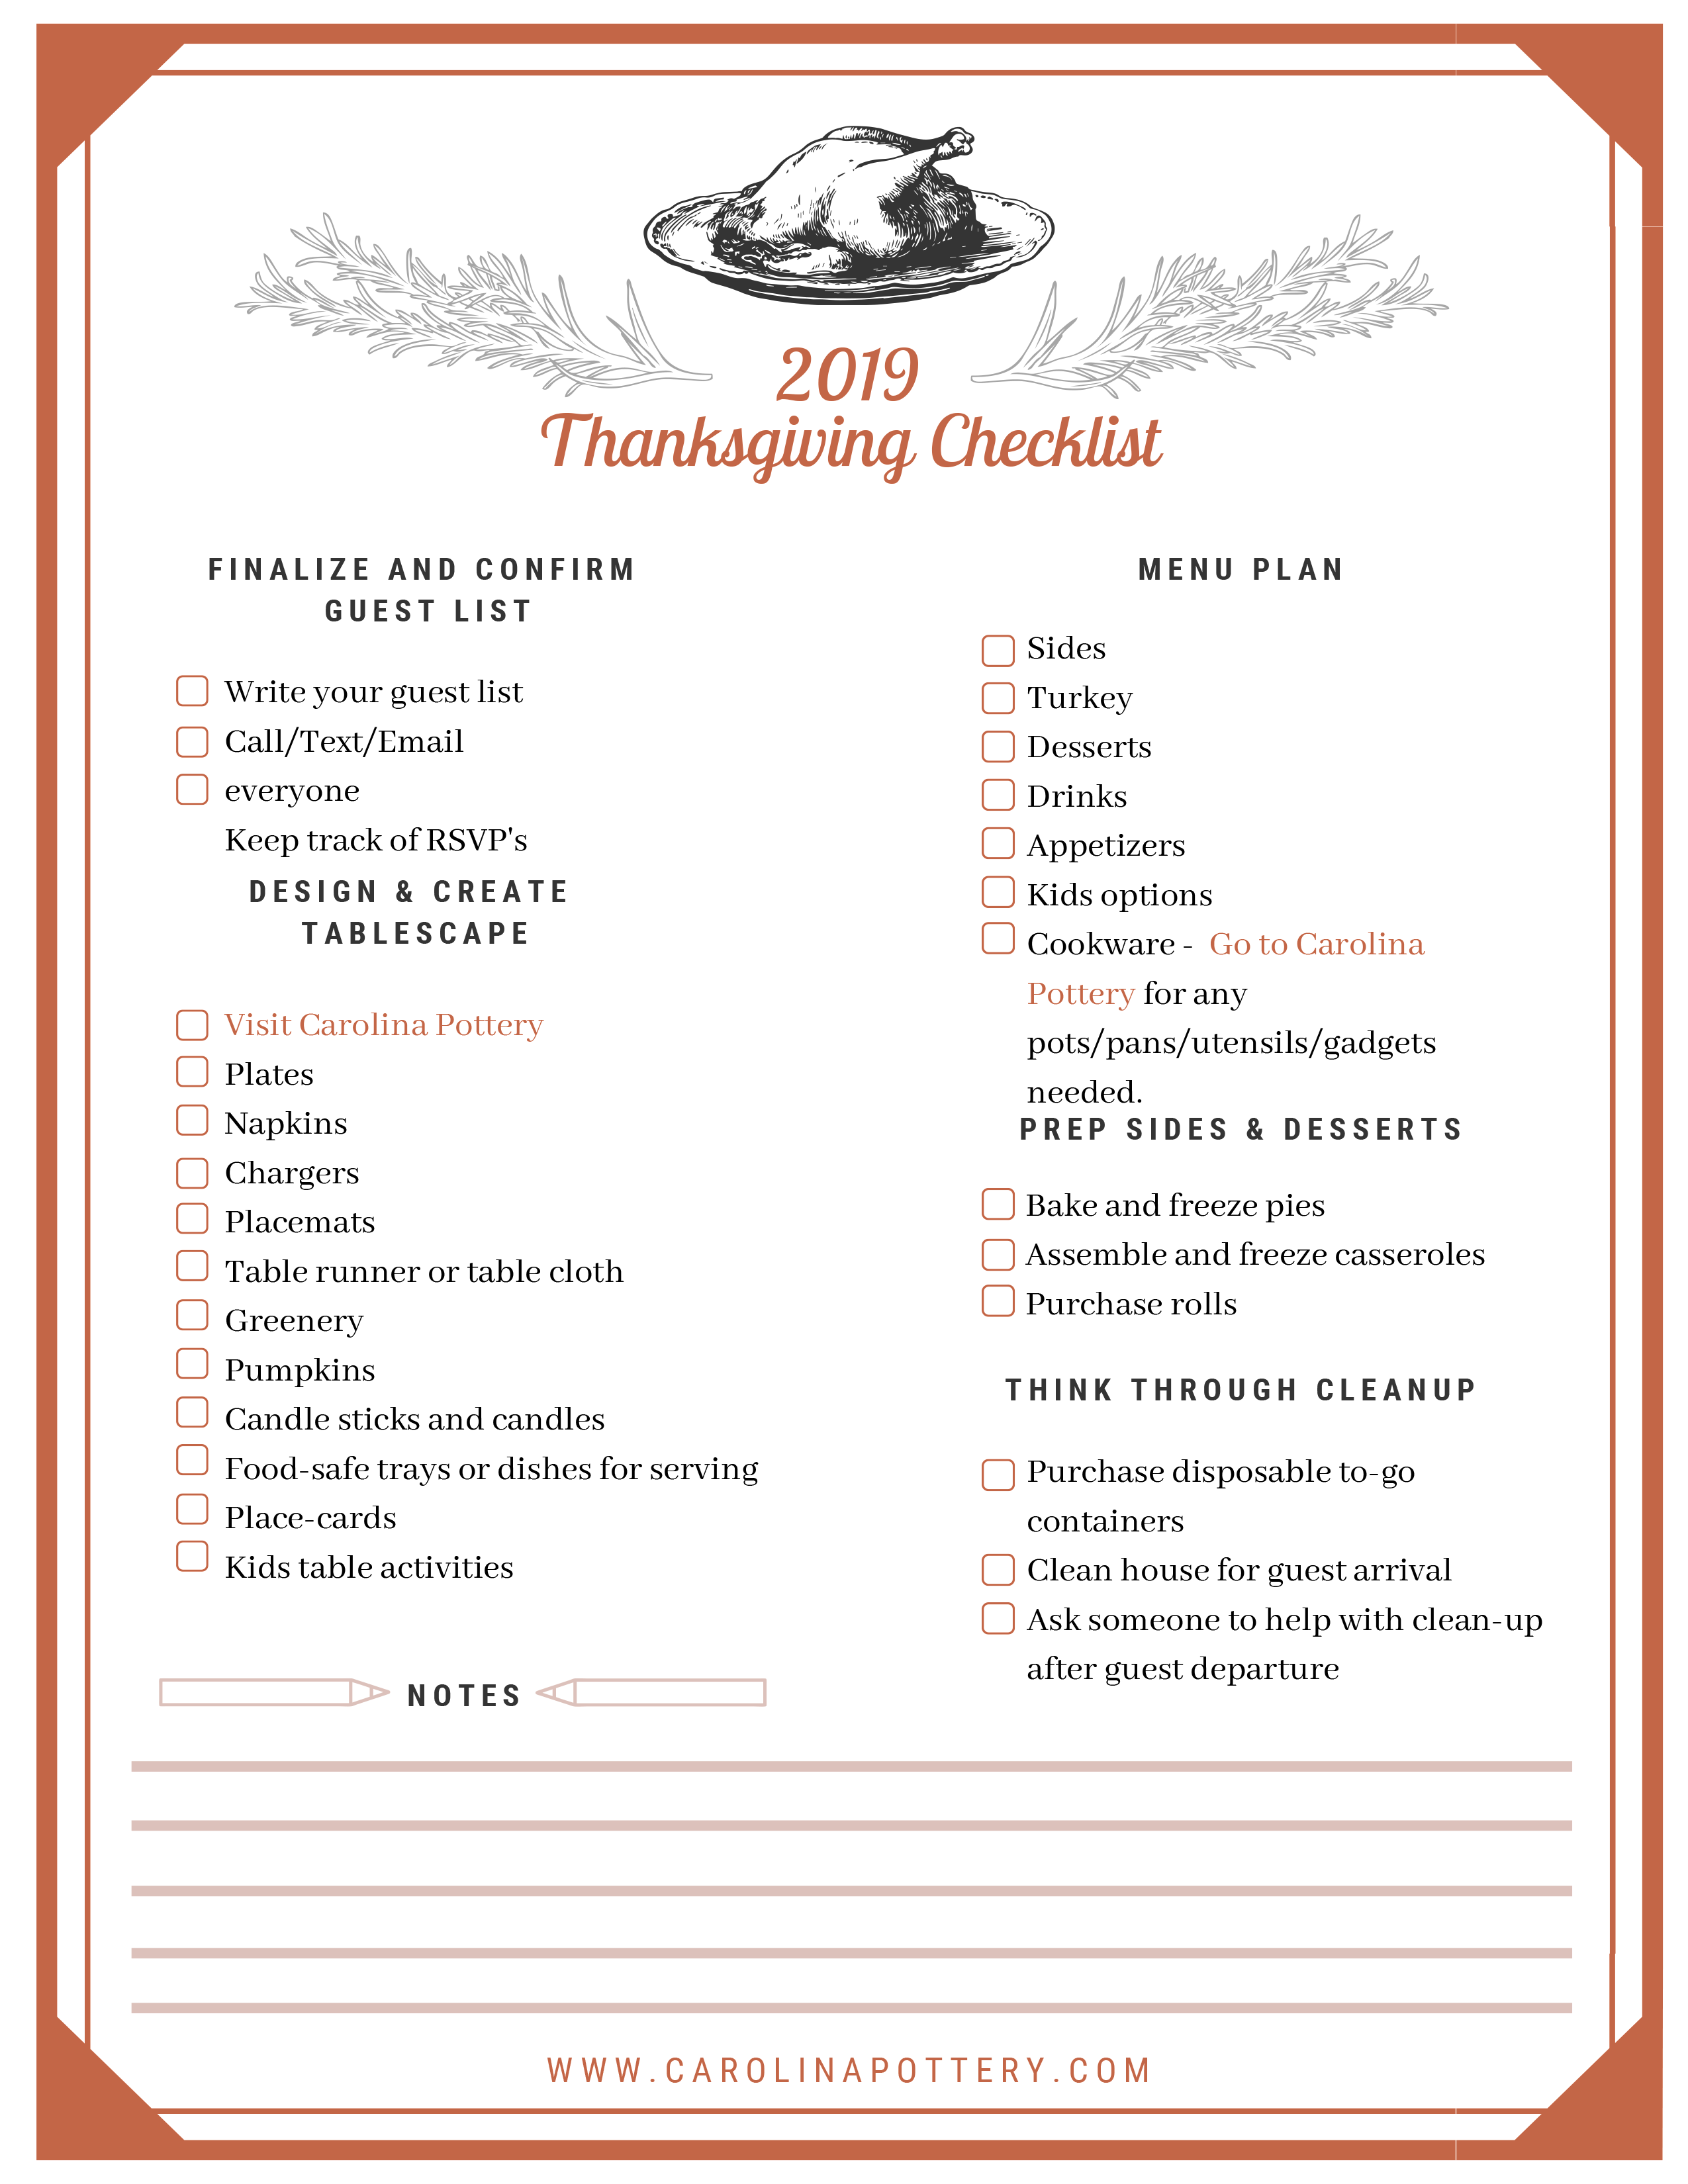 Thanksgiving Checklist Printable | Carolina Pottery